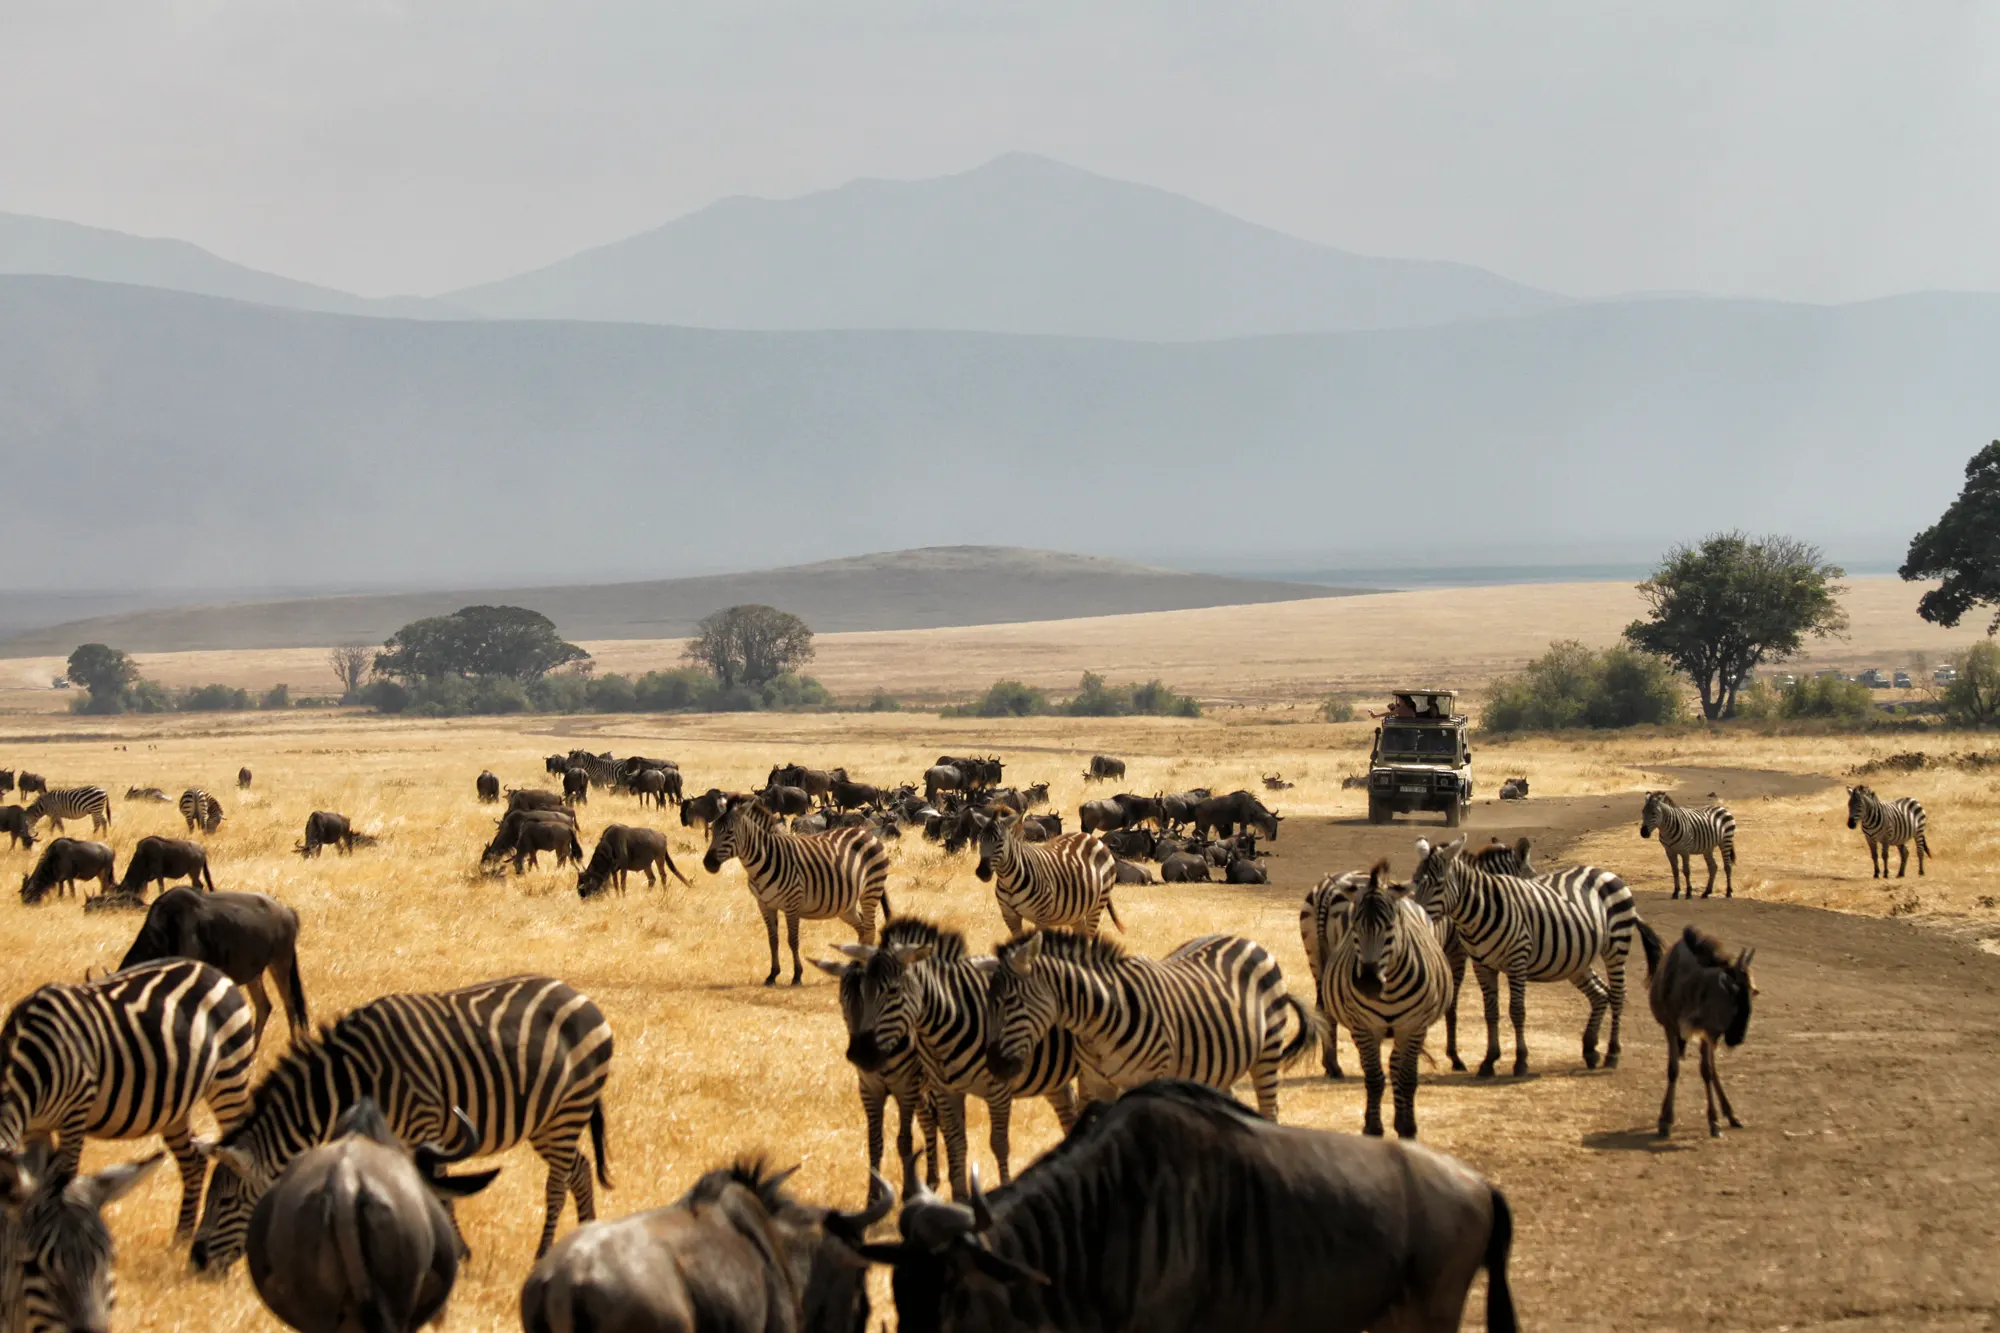 Ngorongoro Conservation Crater - Tanzania